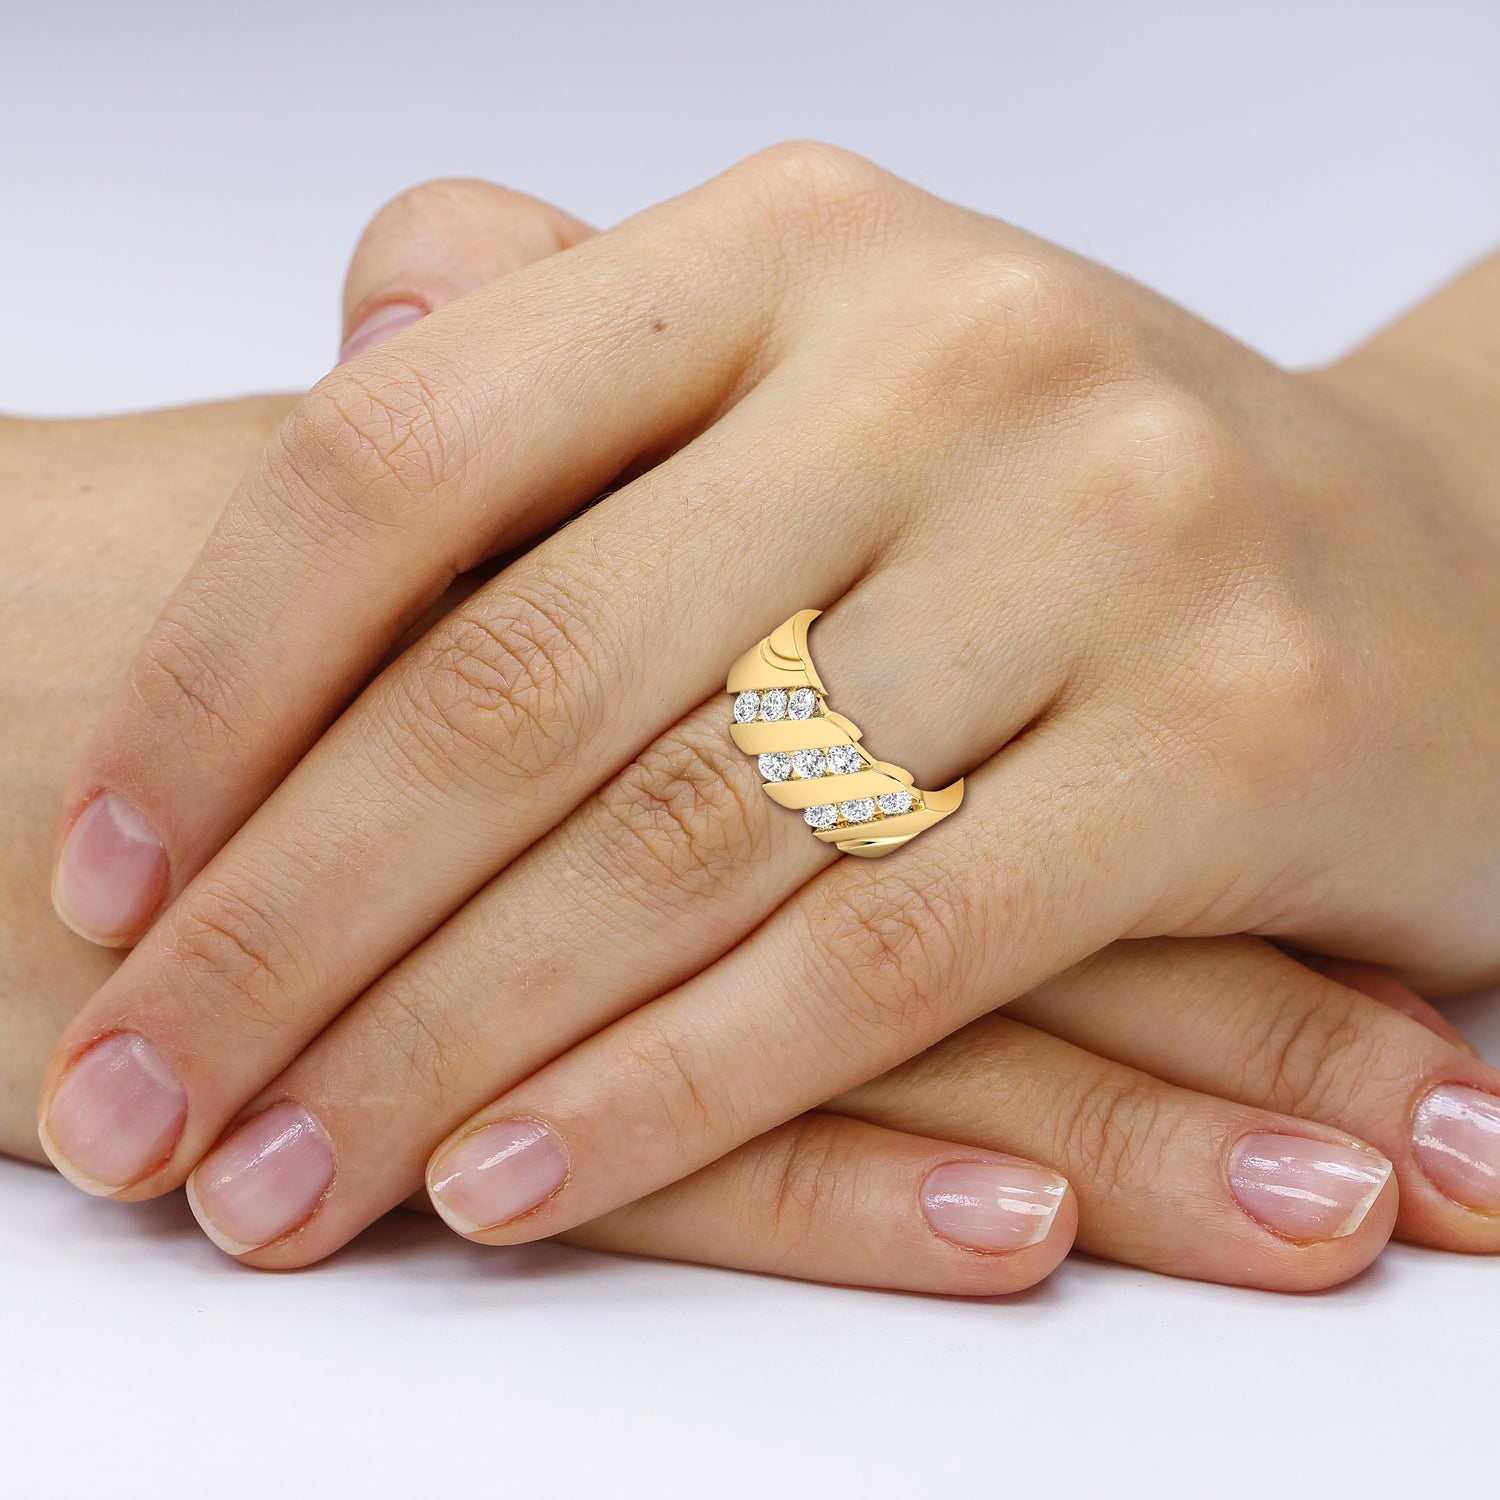 0.85 CT Round Cut Lab Grown Diamonds - Mens Wedding Band